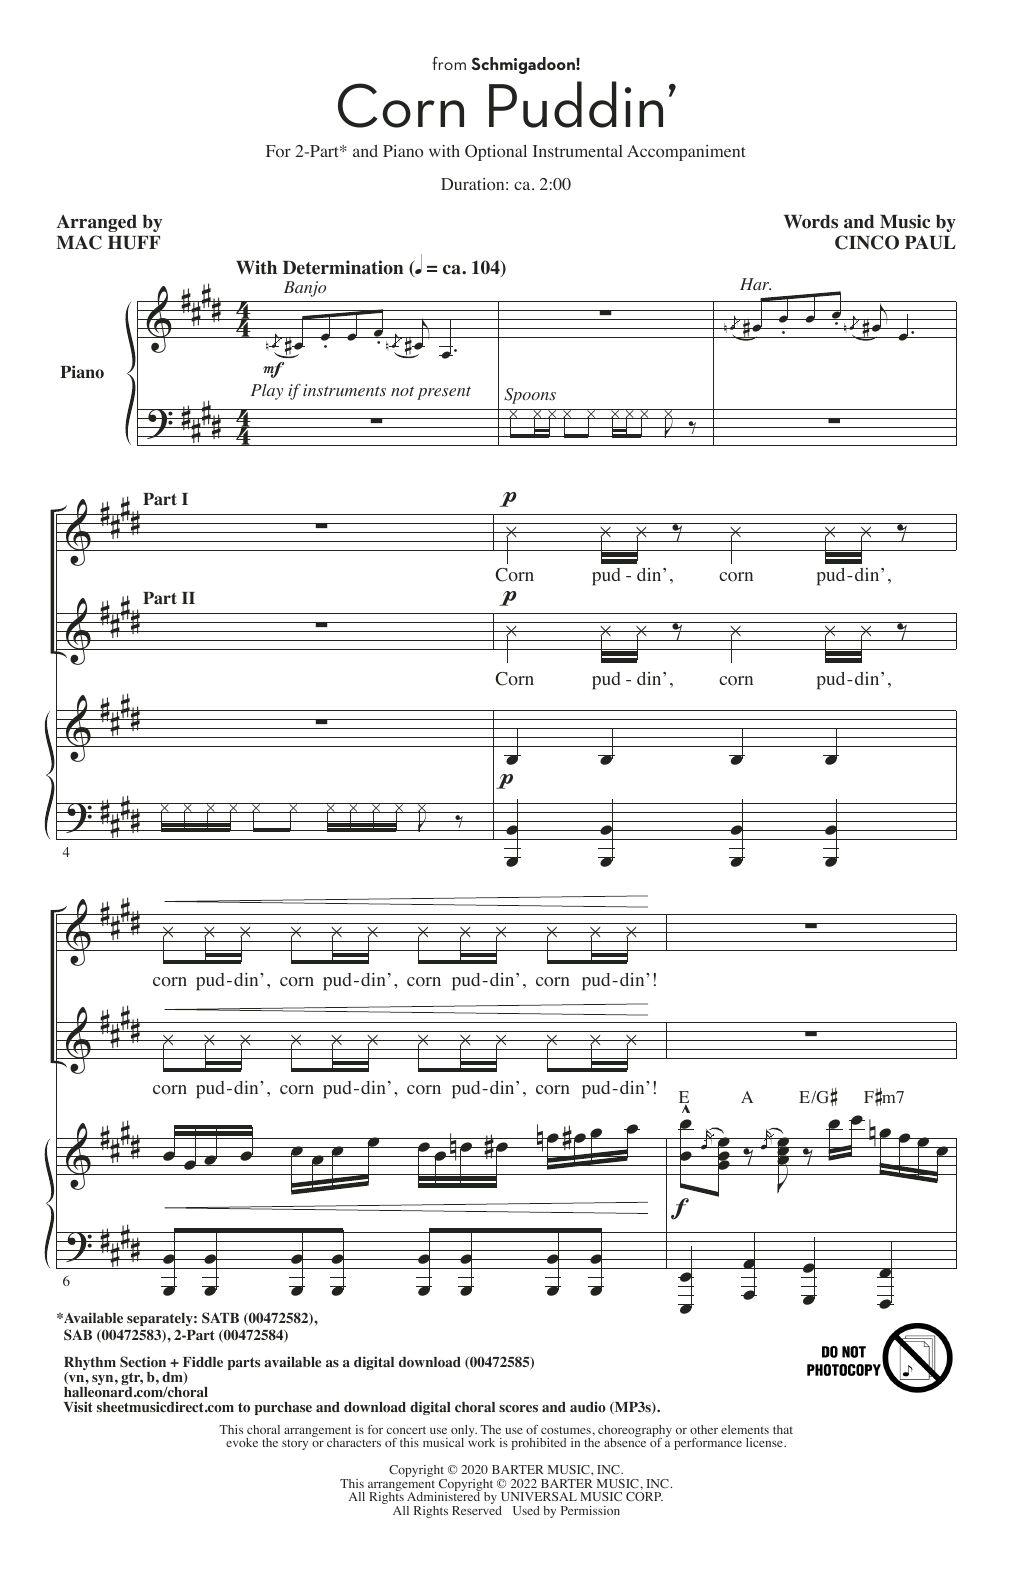 Cinco Paul Corn Puddin' (from Schmigadoon!) (arr. Mac Huff) sheet music notes and chords arranged for SAB Choir